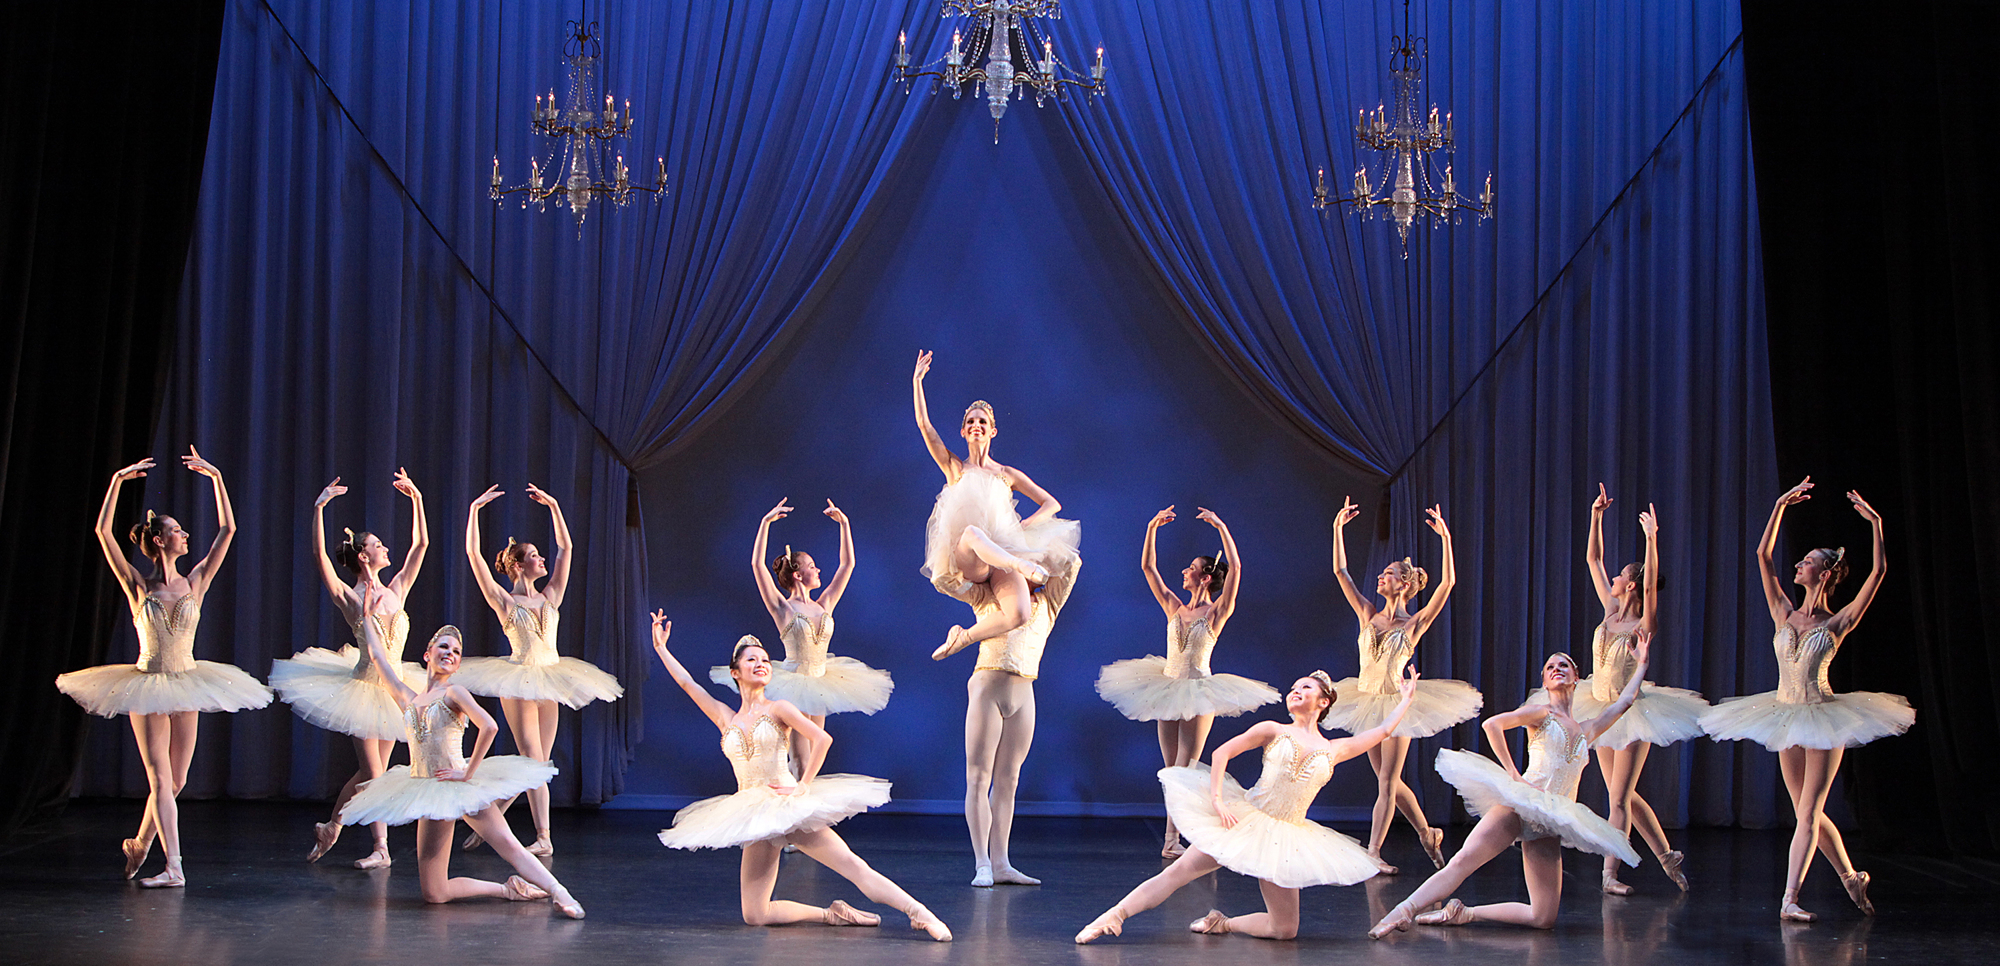 The Sarasota Ballet will present Galina Samsova’s “Paquita” again this year. Photo by Frank Atura